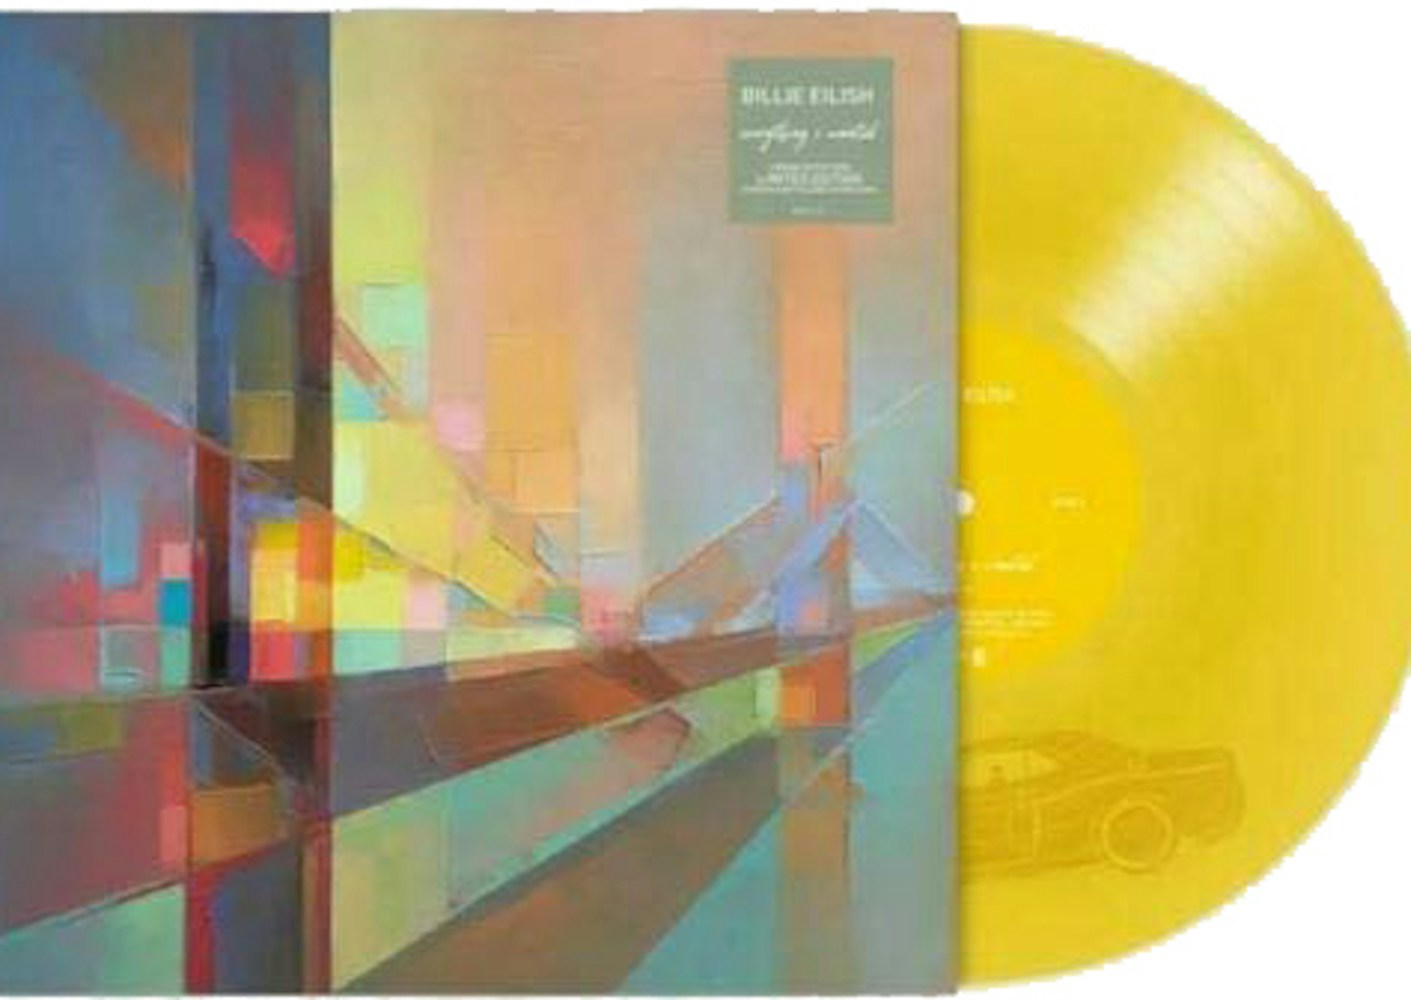 Billie Eilish Everything I Wanted Limited Edition Yellow Translucent LP